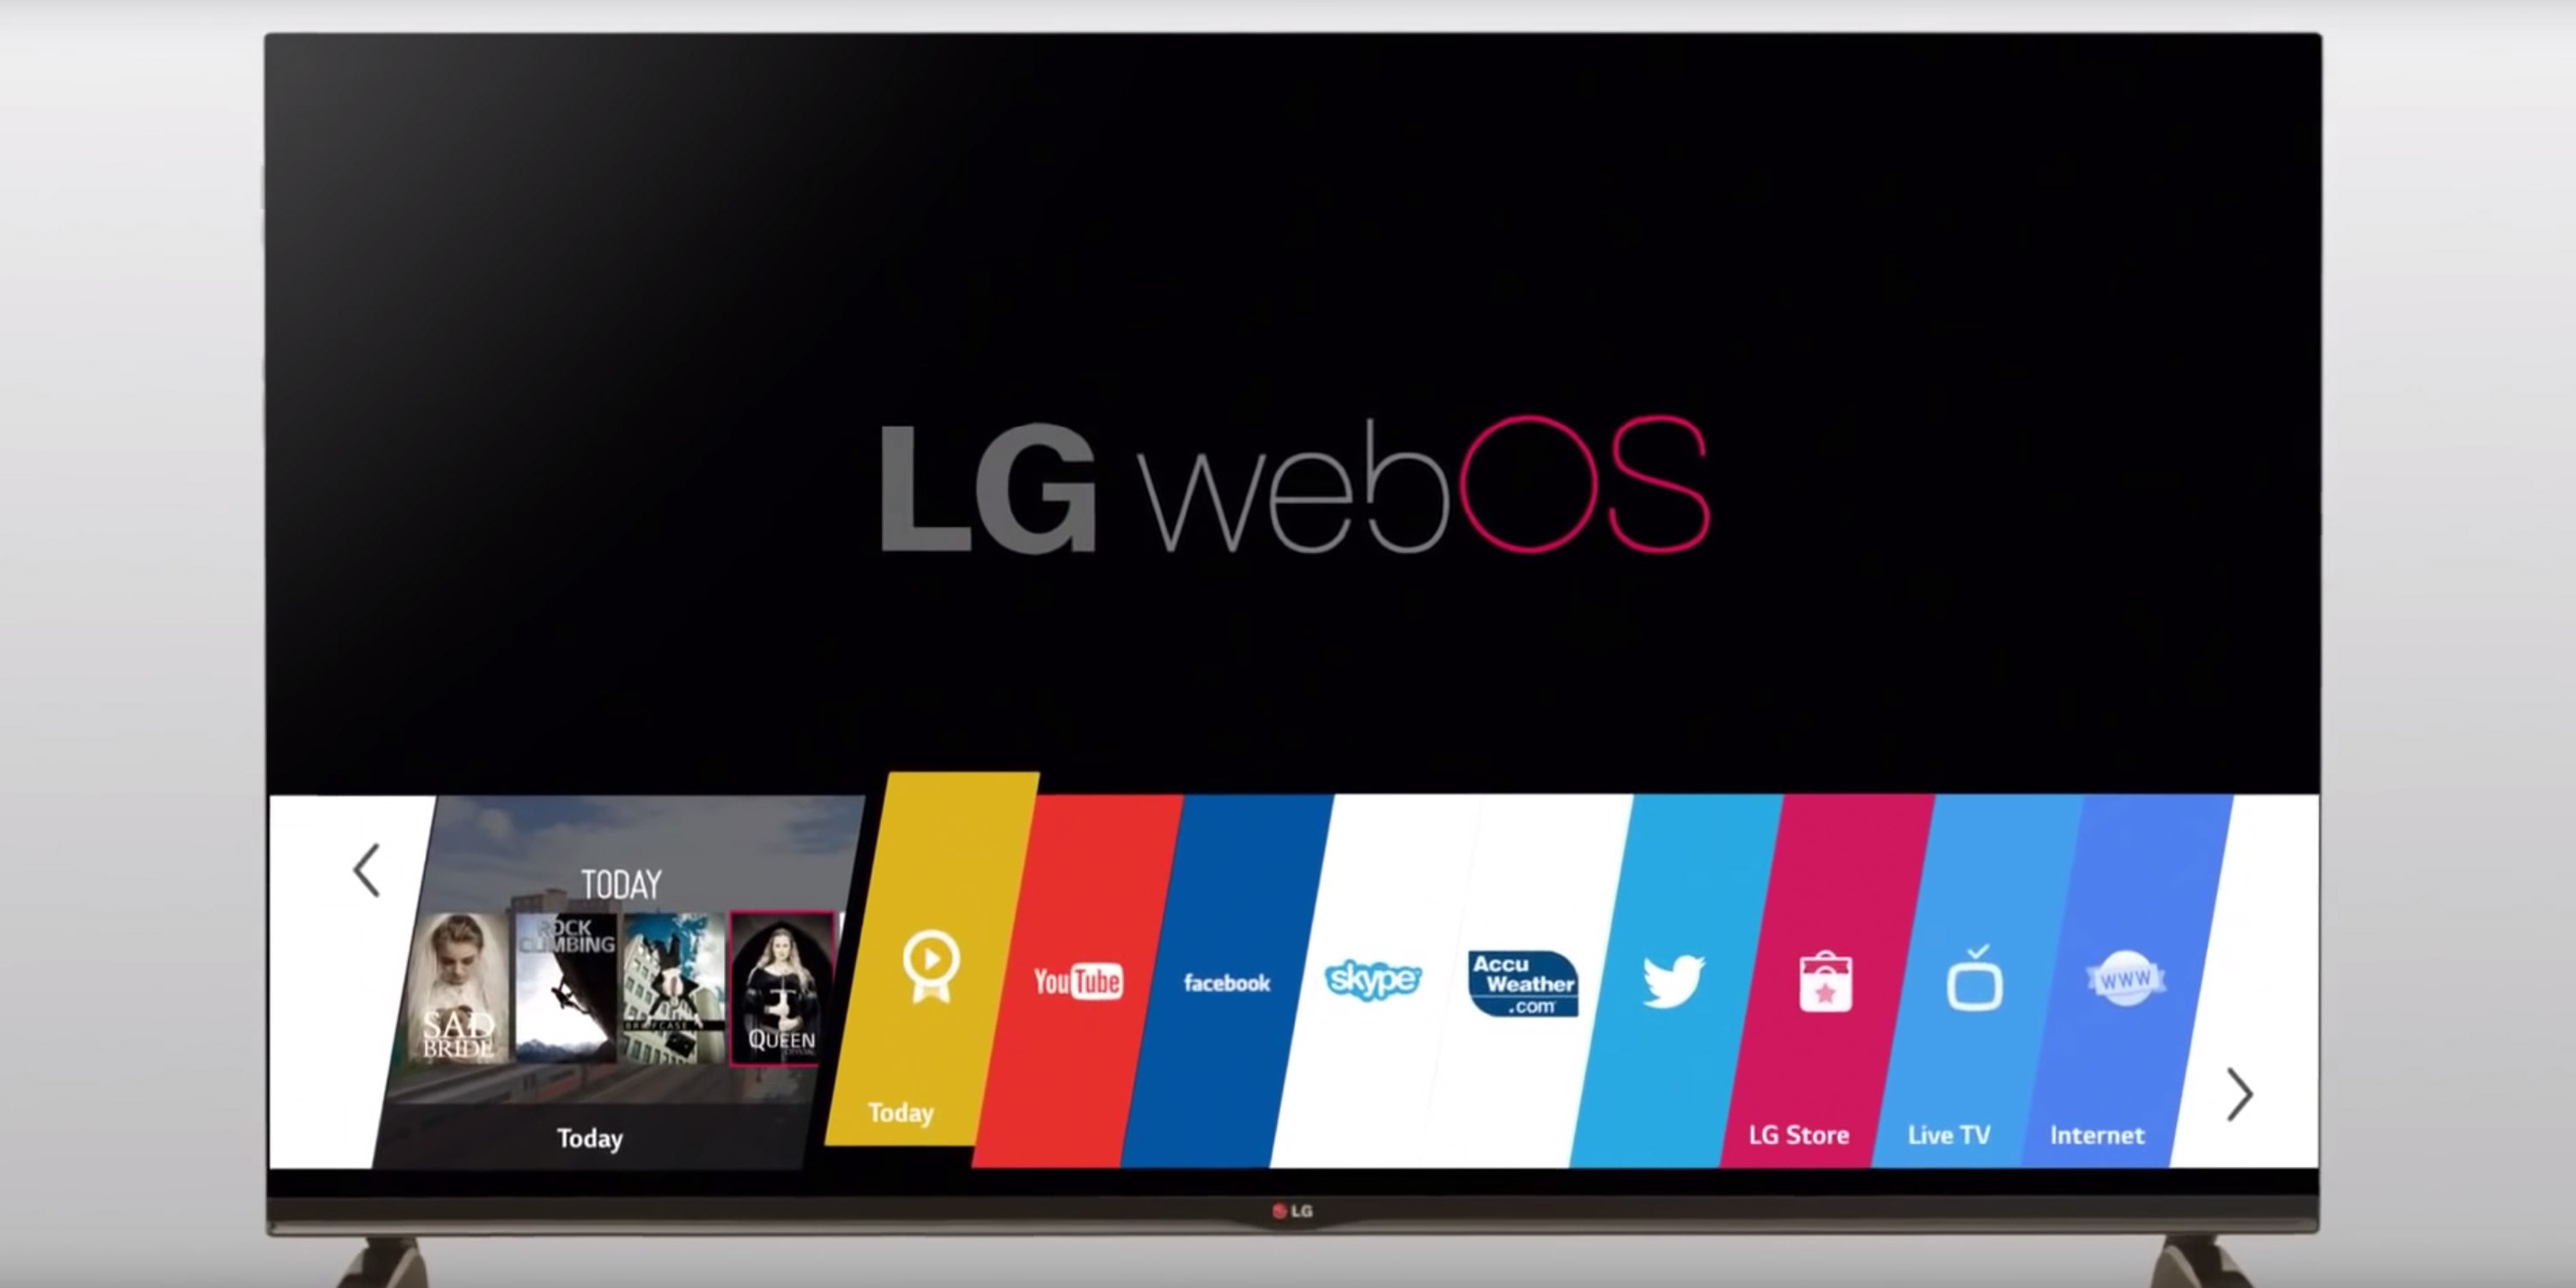 Apk на телевизор lg. Телевизор LG WEBOS TV. Smart TV lg42lb. Телевизоры LG 2014 года LG Smart TV. Телевизор LG смарт Операционная система.